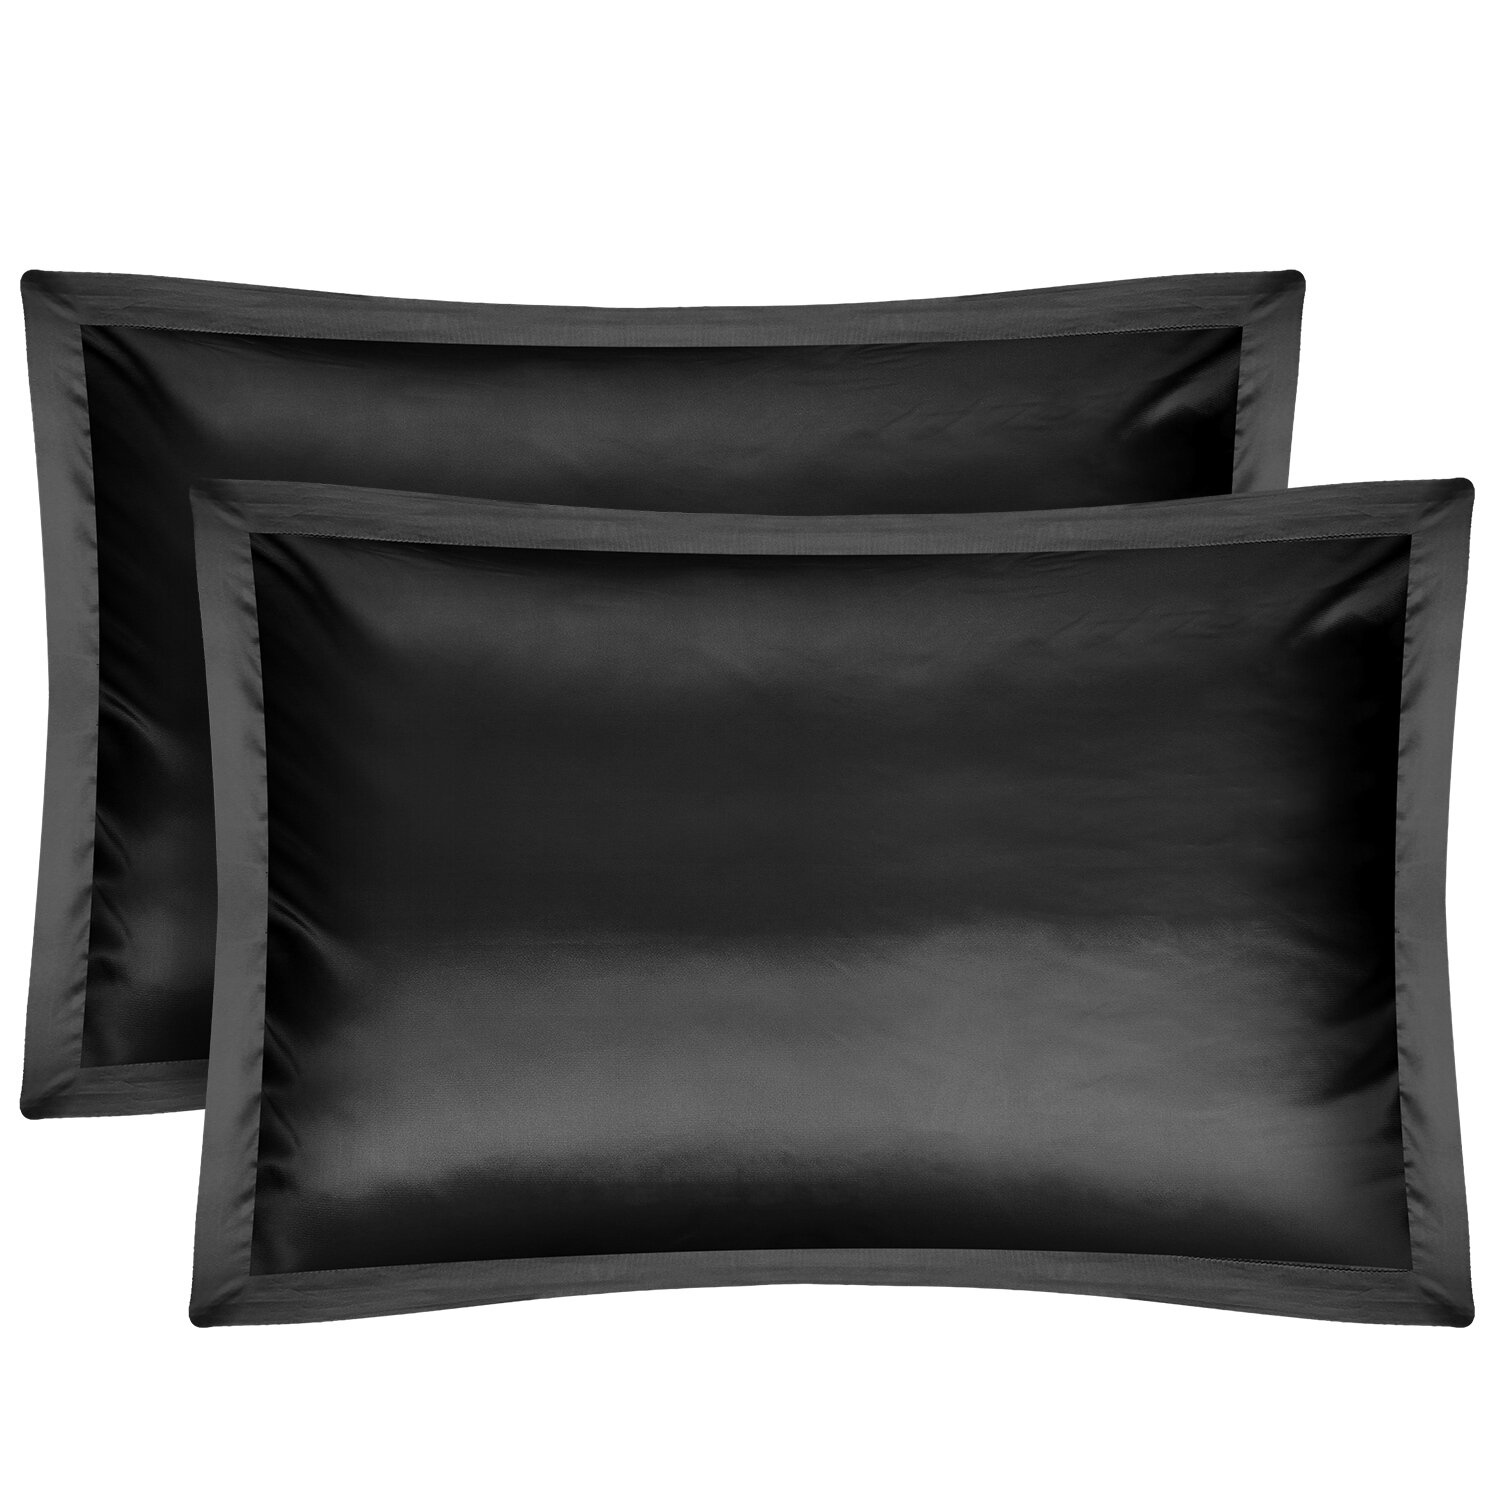 2 Pack Queen King Pillowcase Satin Silky Soft Premium Cushion Cover Pillow Cases 